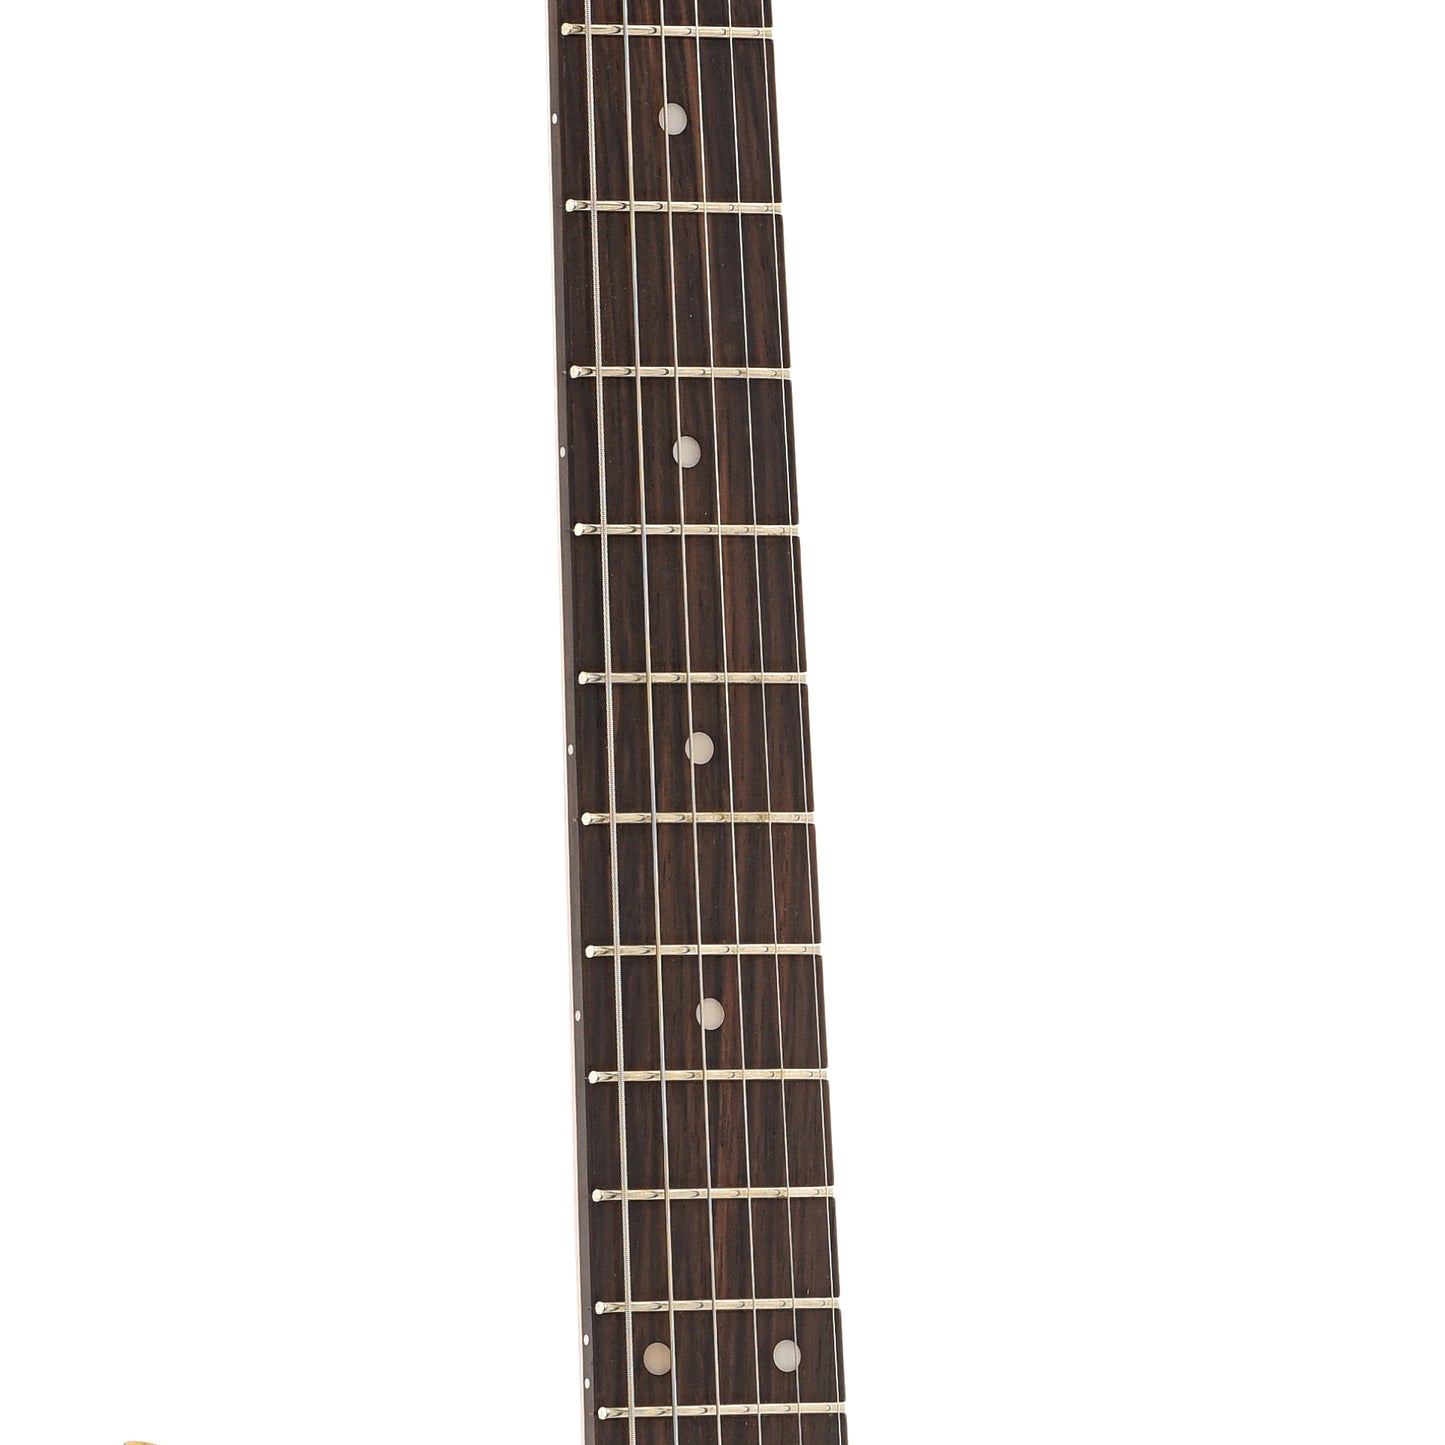 Fretboard of Ibanez Paul Gilbert Signature PGM50 Electric Guitar, Black